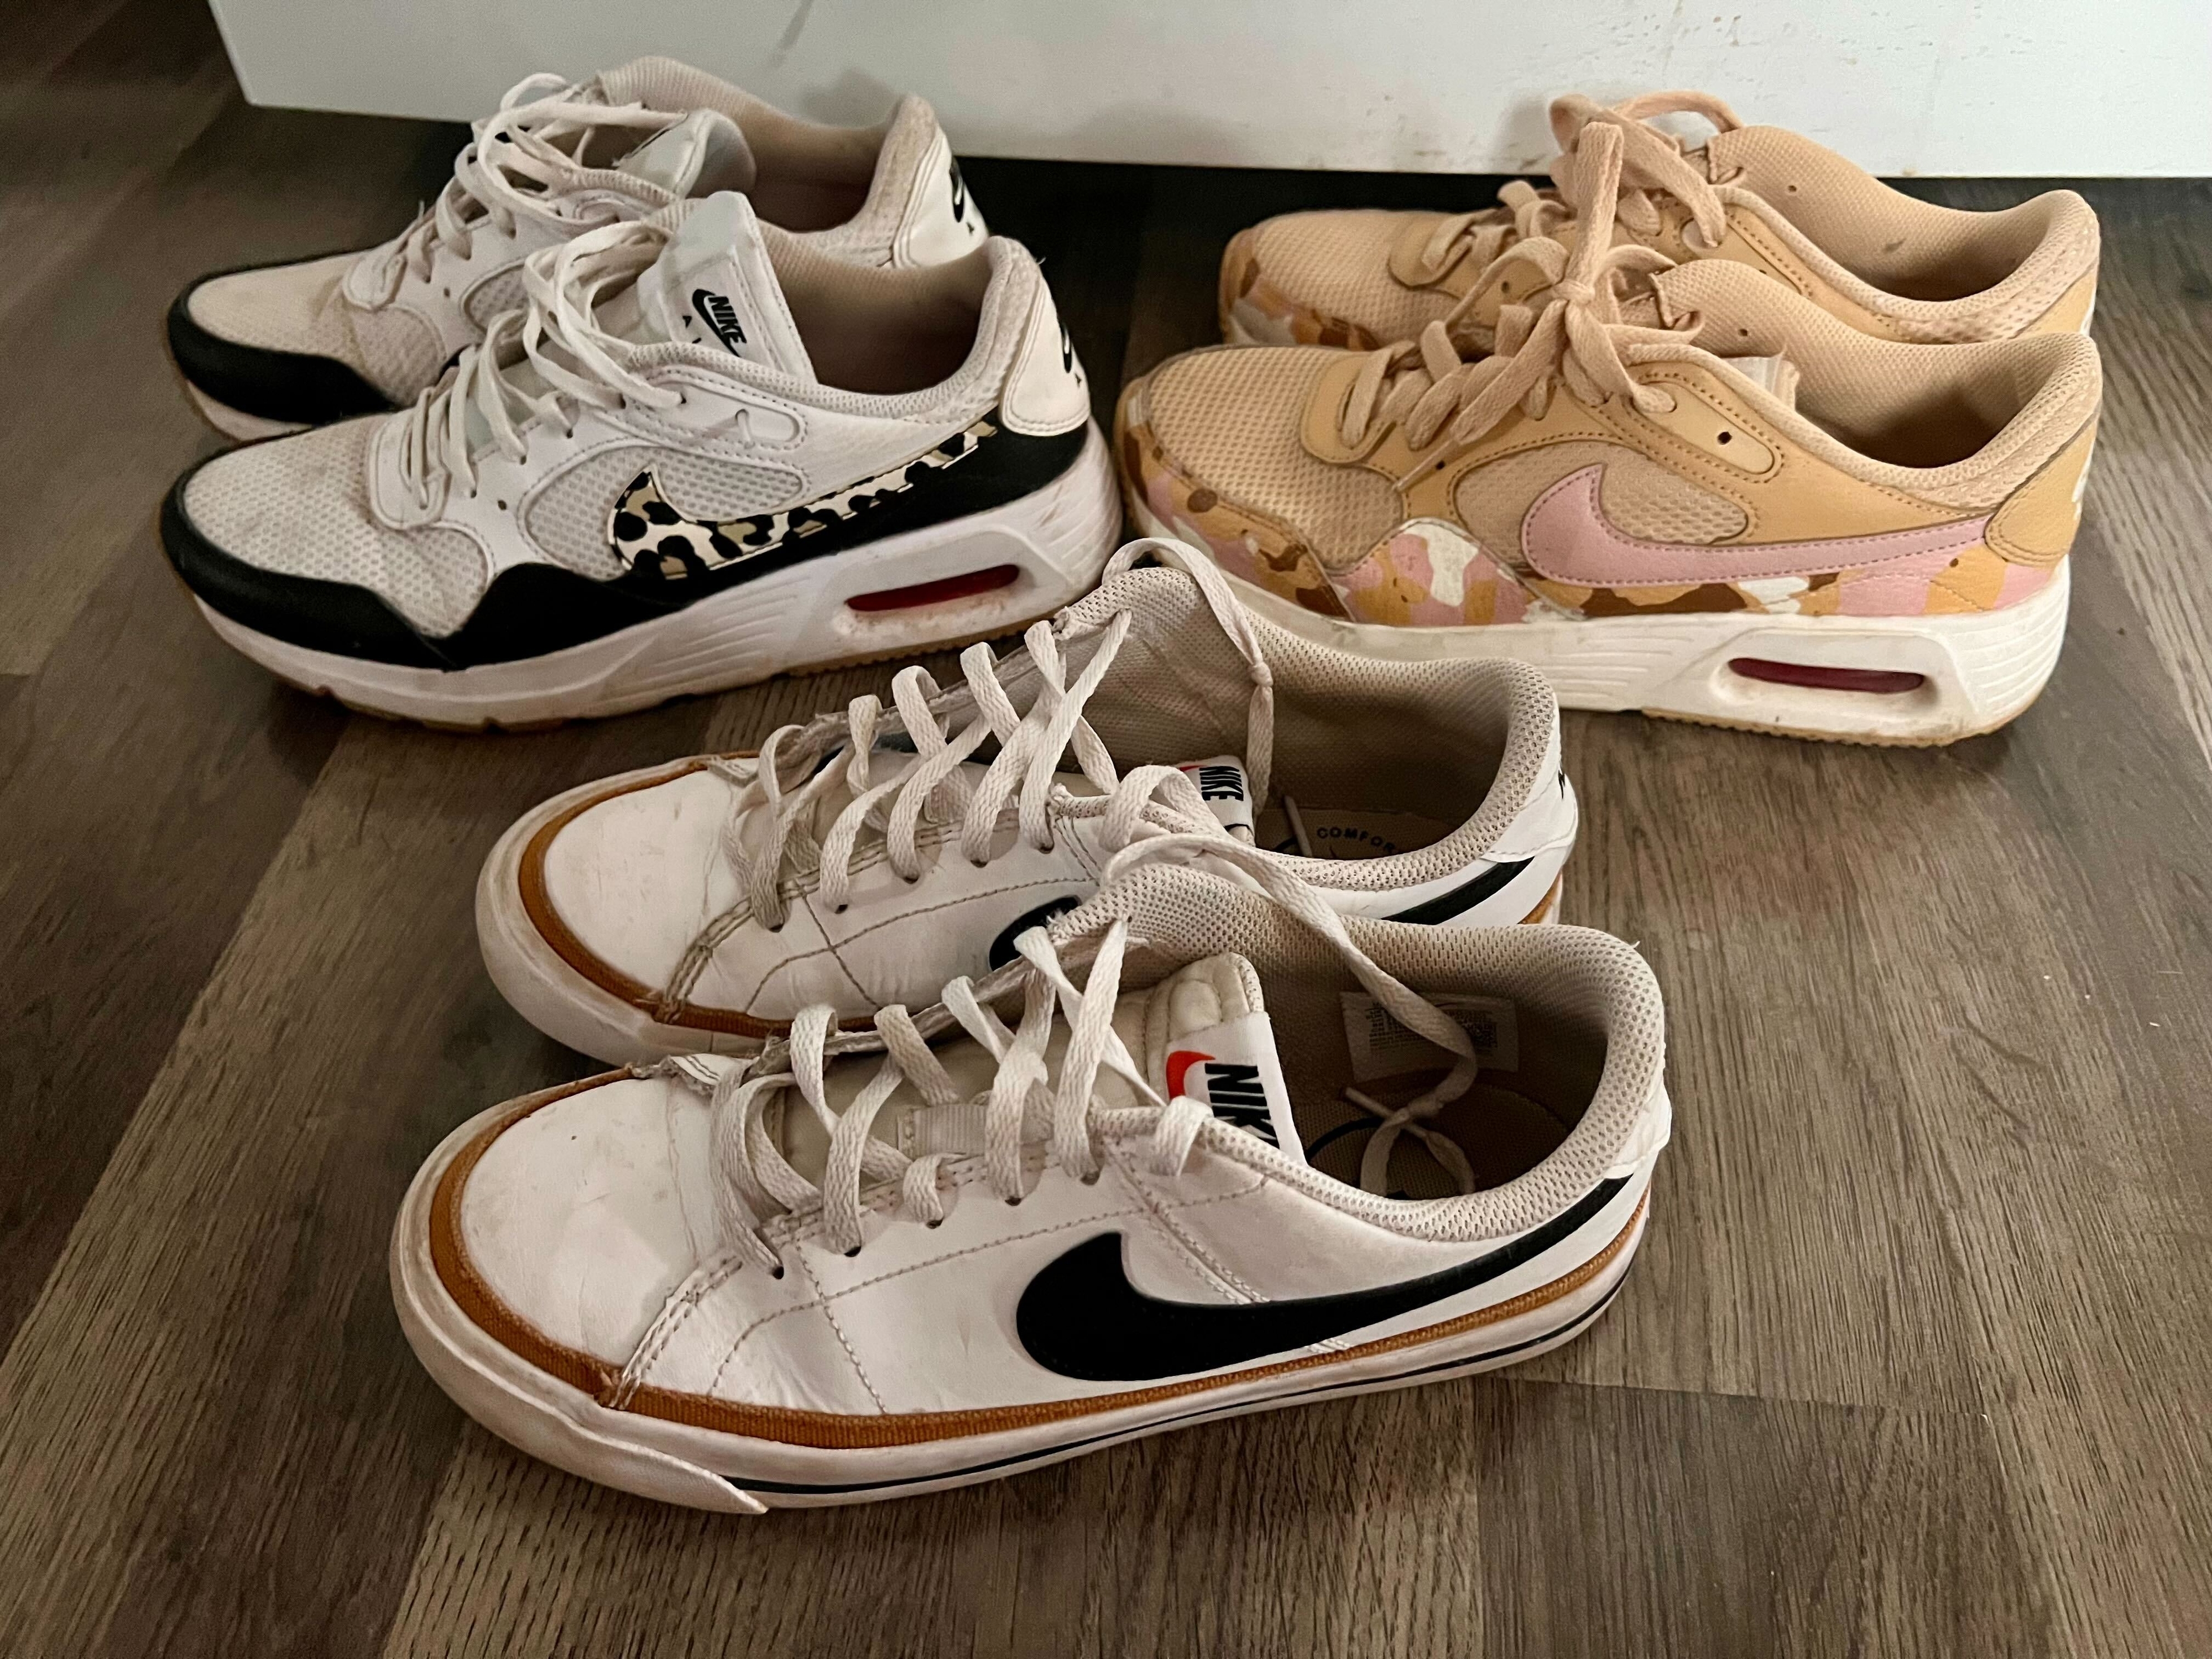 Three pairs of Nike sneakers